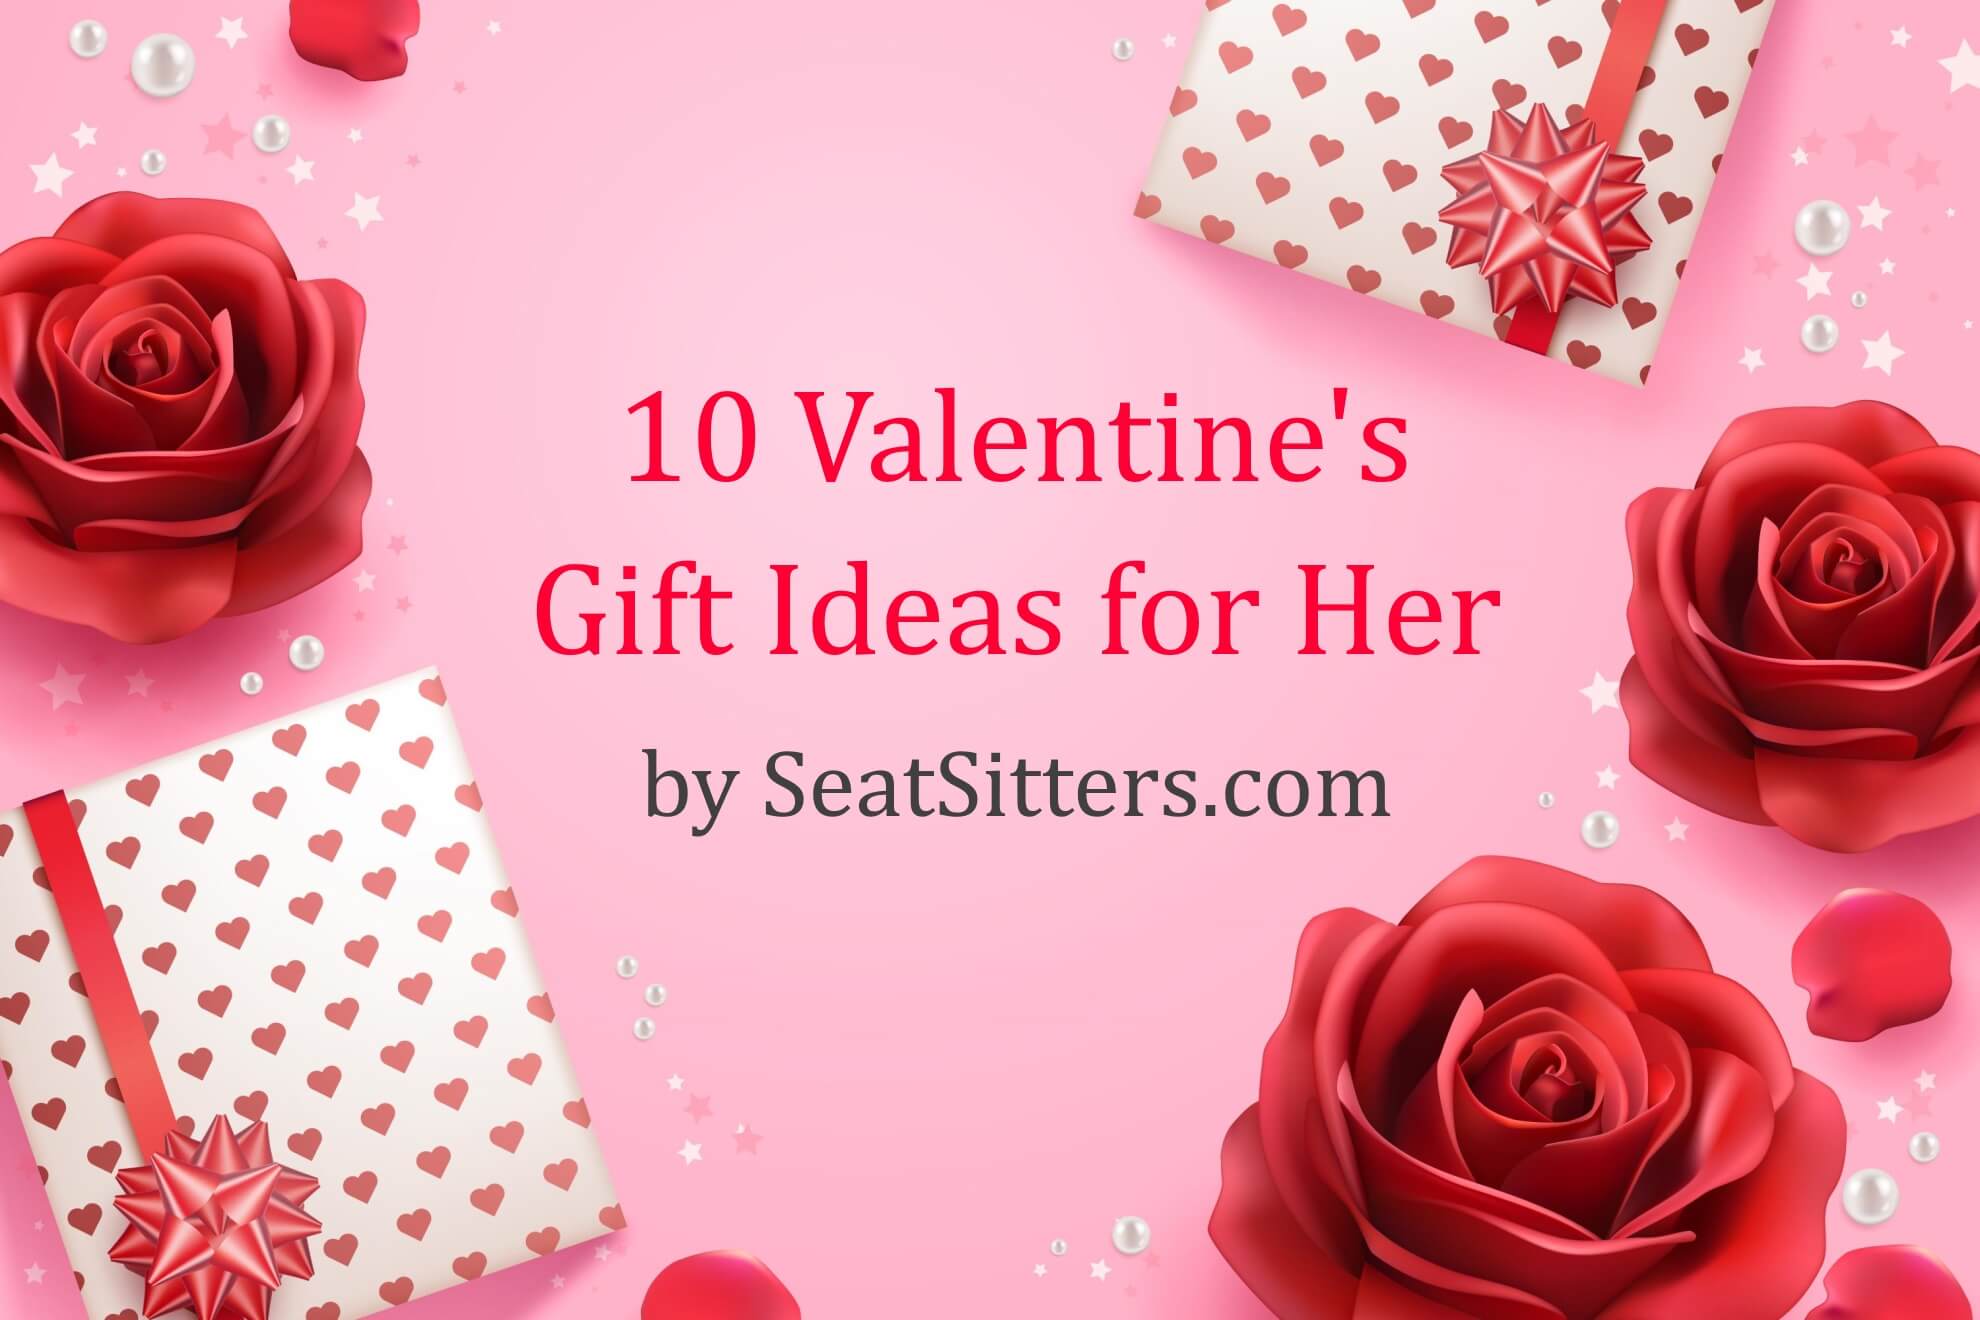 SeatSitters Valentine's Gift Guide for Her - 10 Handpicked Ideas